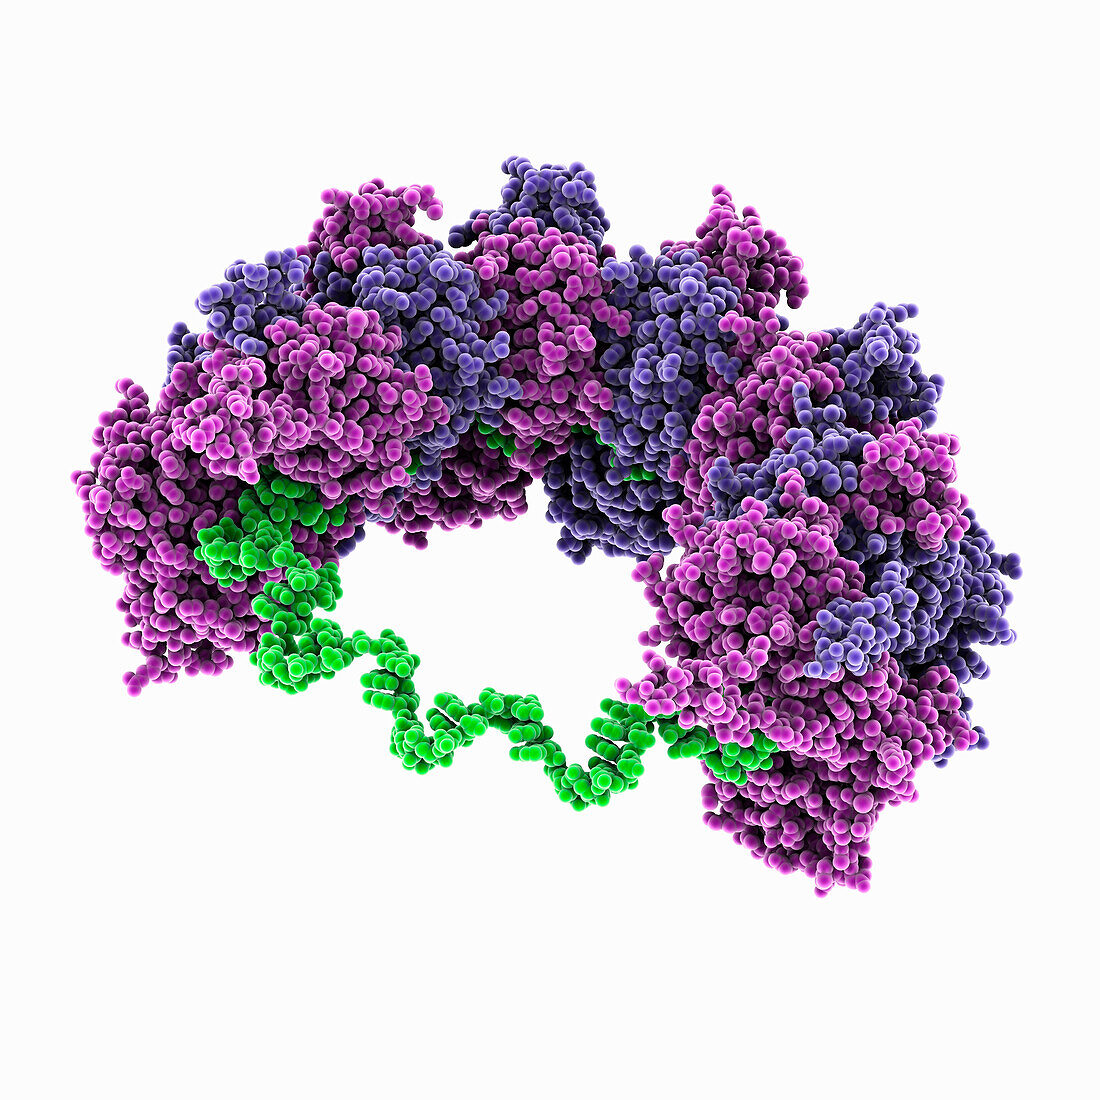 Rabies virus nucleoprotein-RNA complex, molecular model